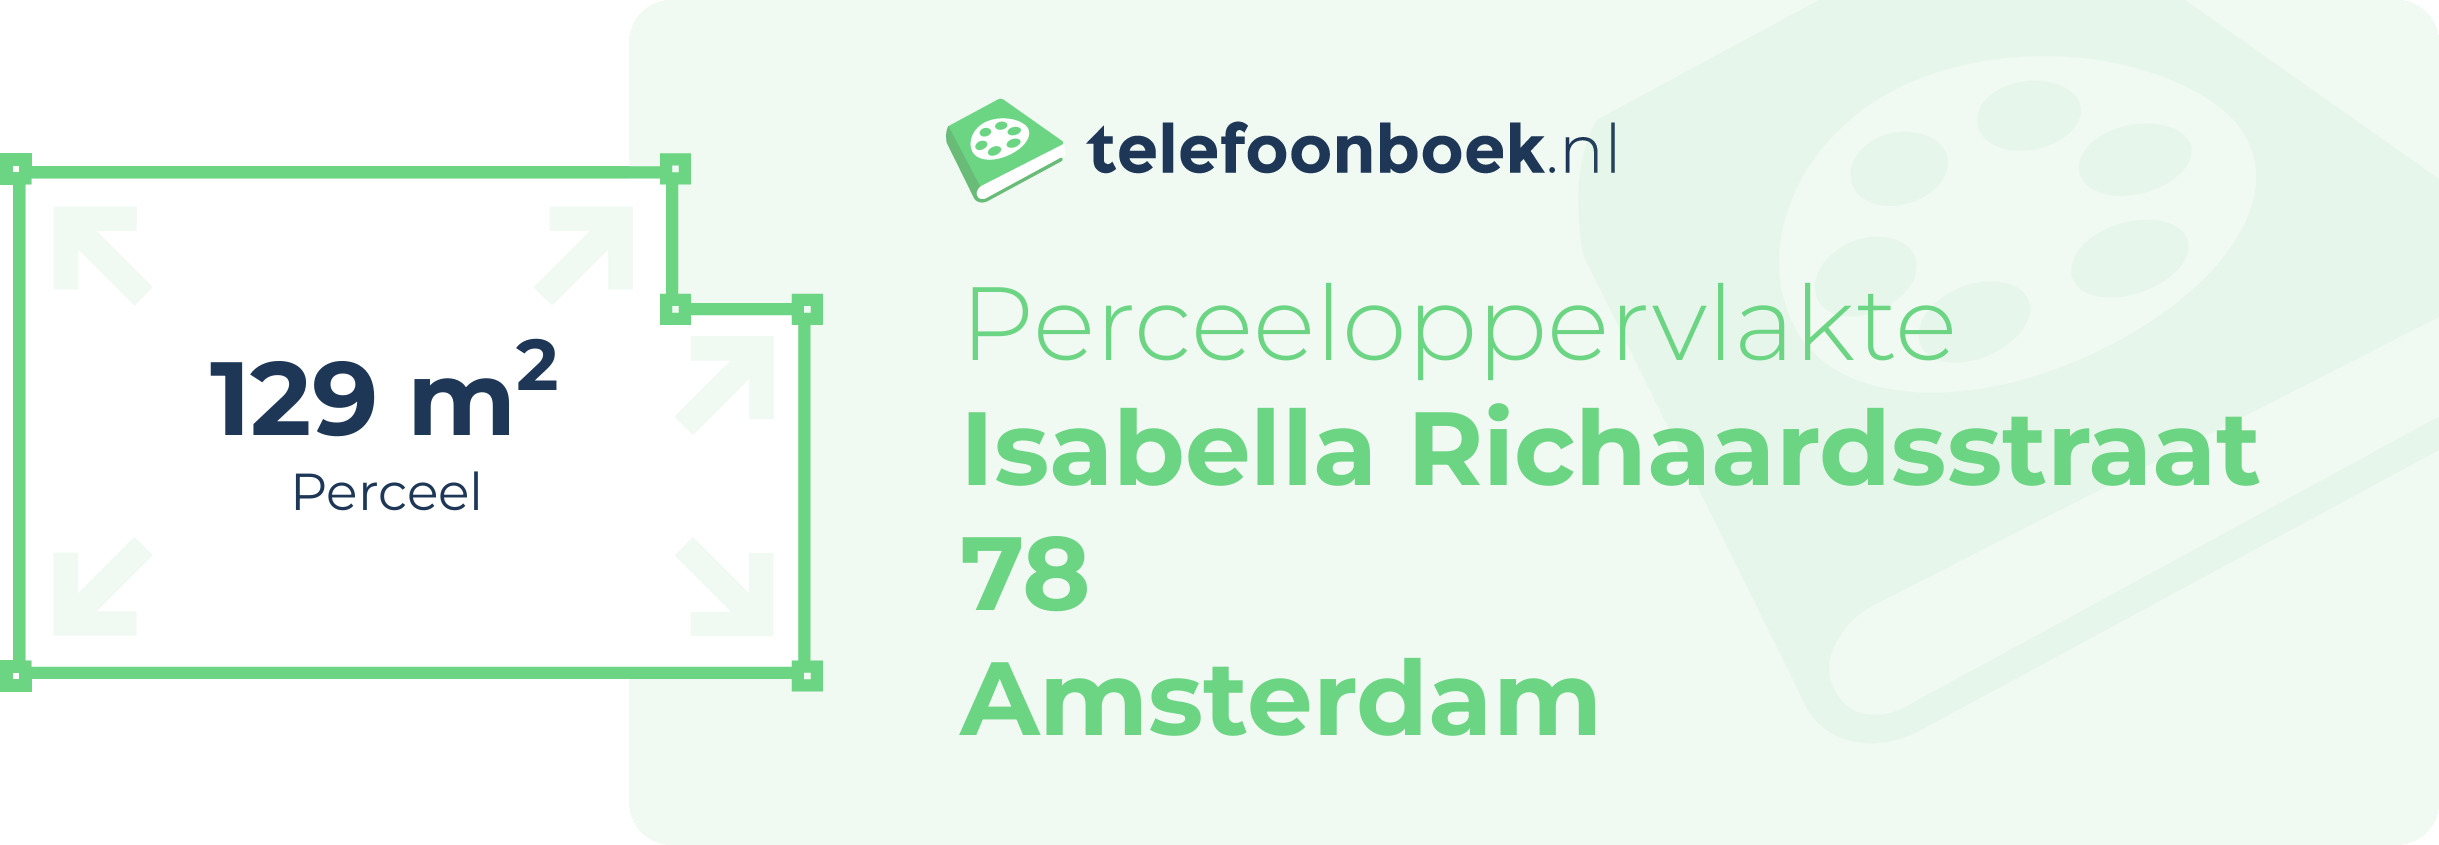 Perceeloppervlakte Isabella Richaardsstraat 78 Amsterdam